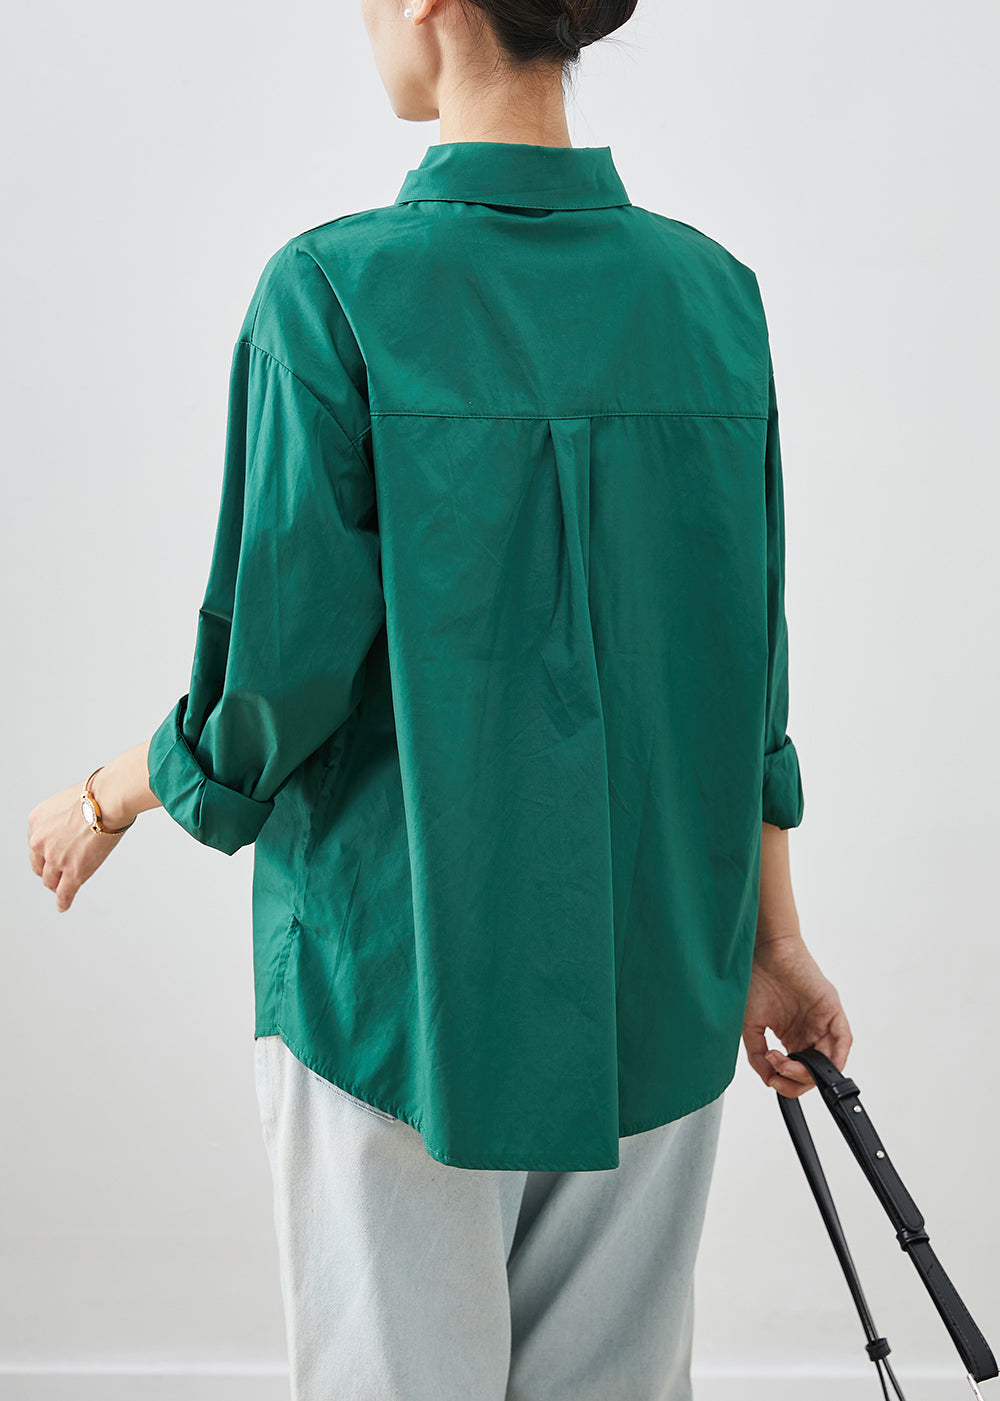 Green Silm Fitn Cotton Shirt Tops Peter Pan Collar Fall Ada Fashion